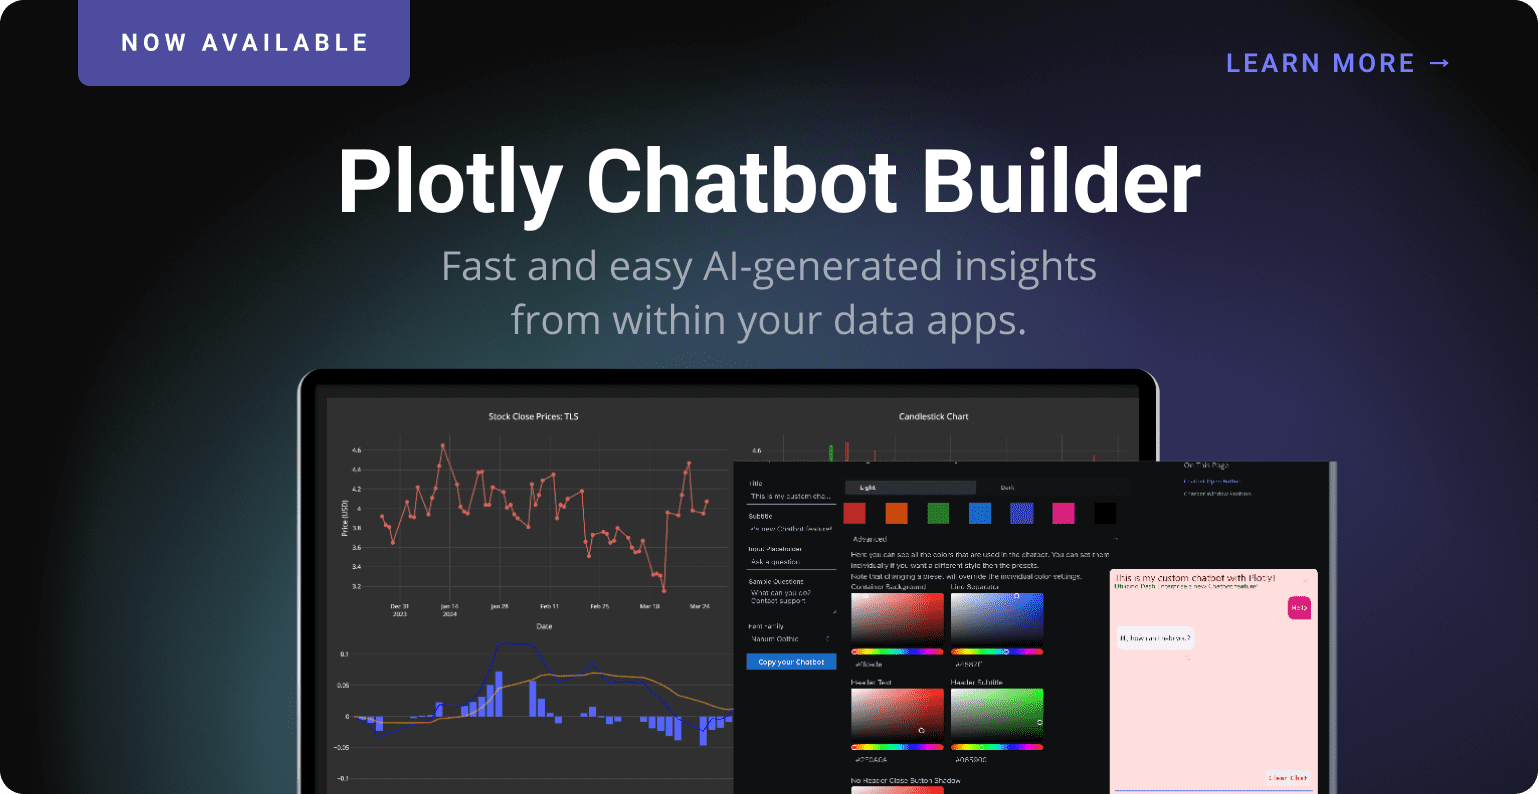 Plotly Chatbot Builder